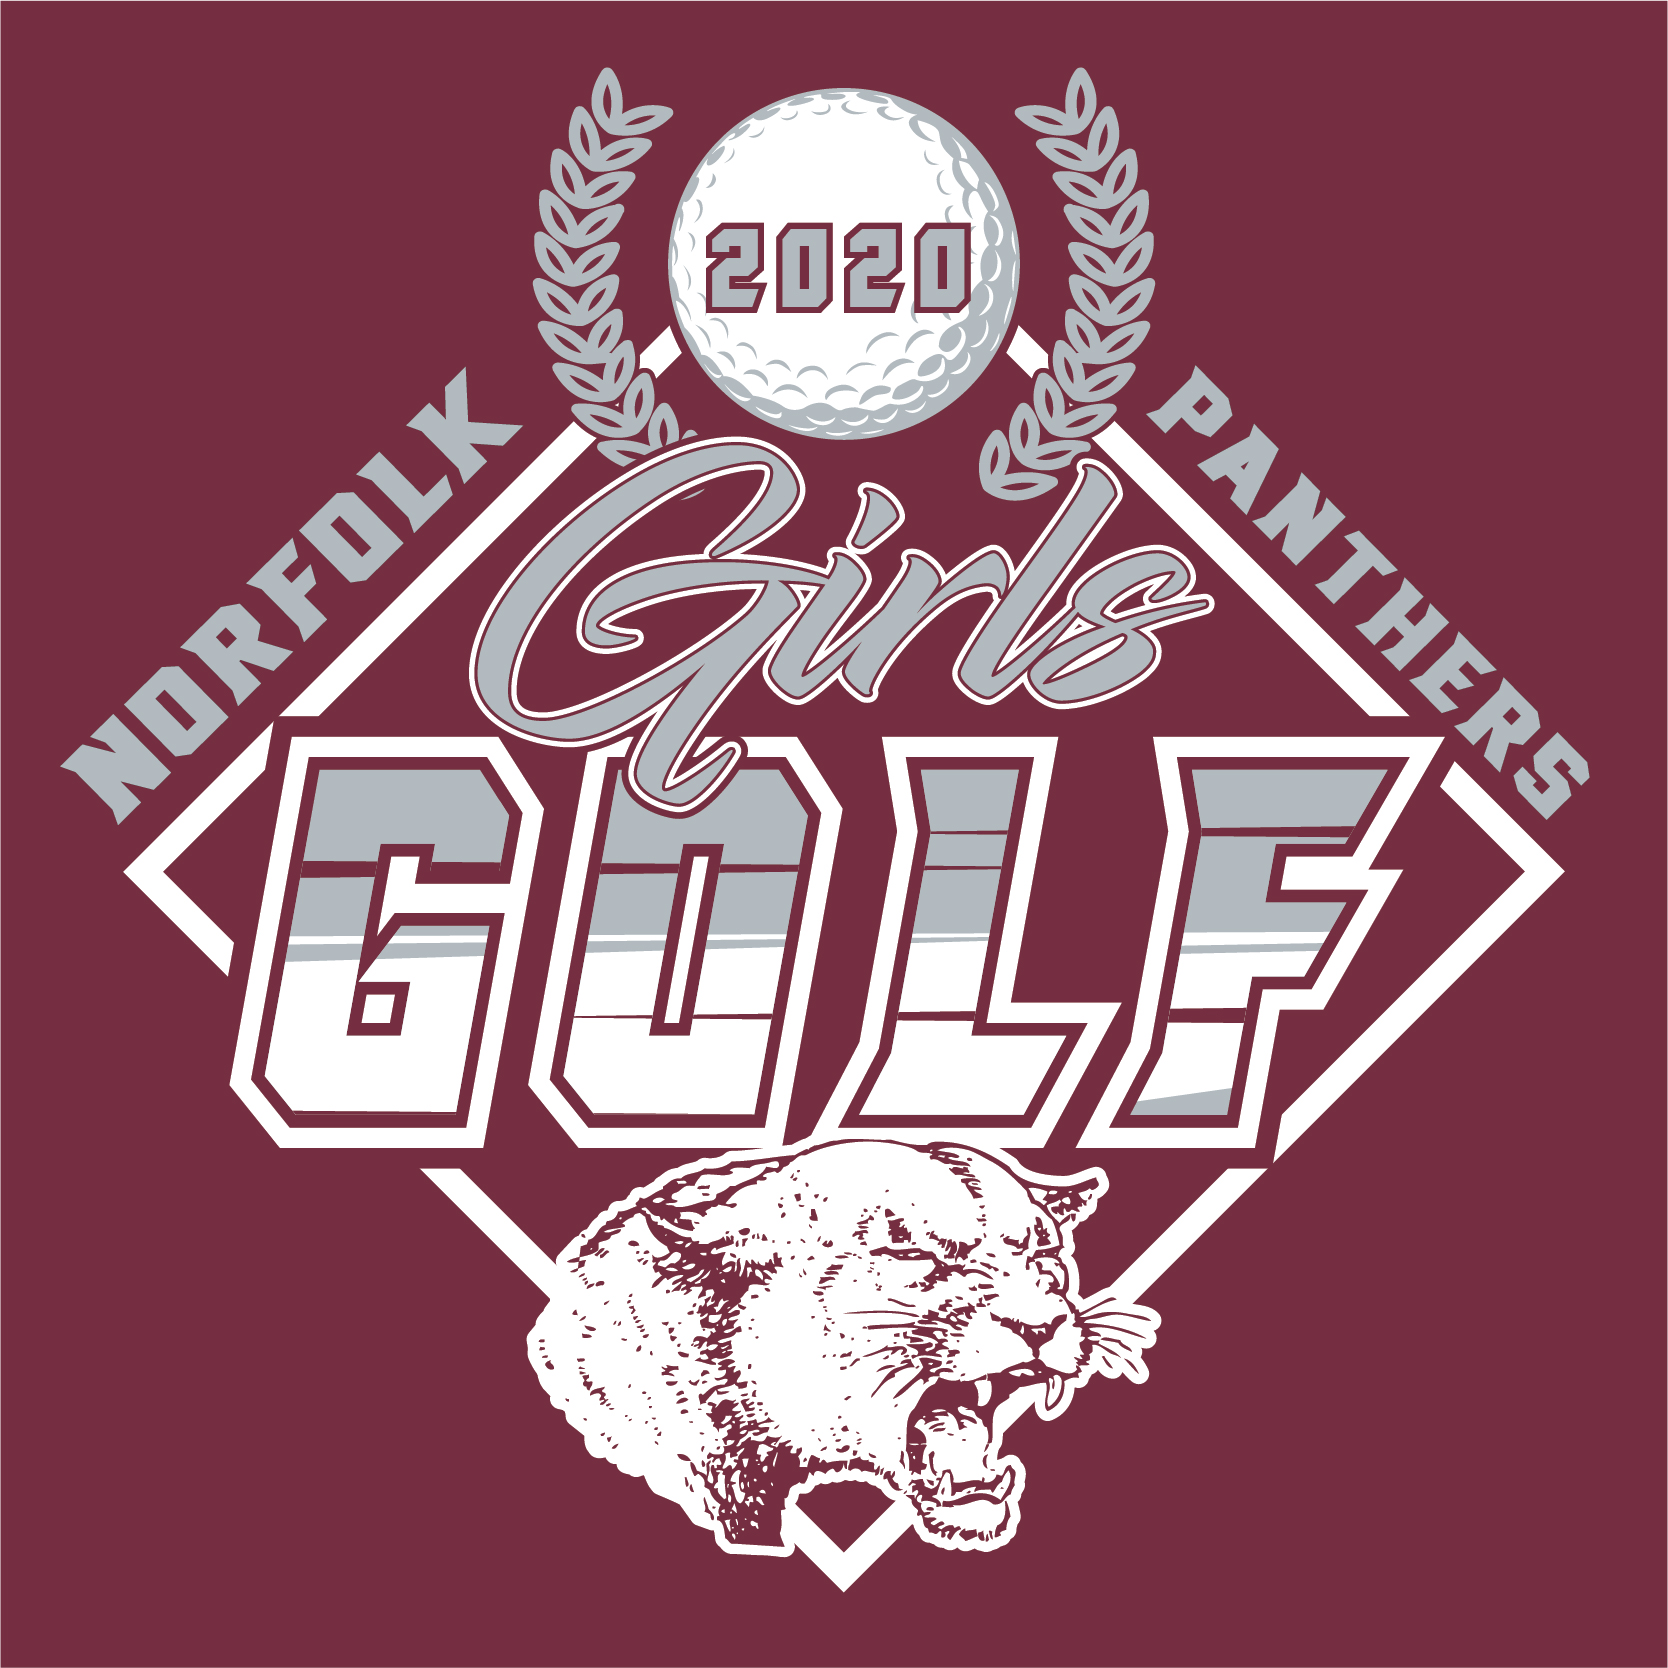 Golf Shirt Logo Designs